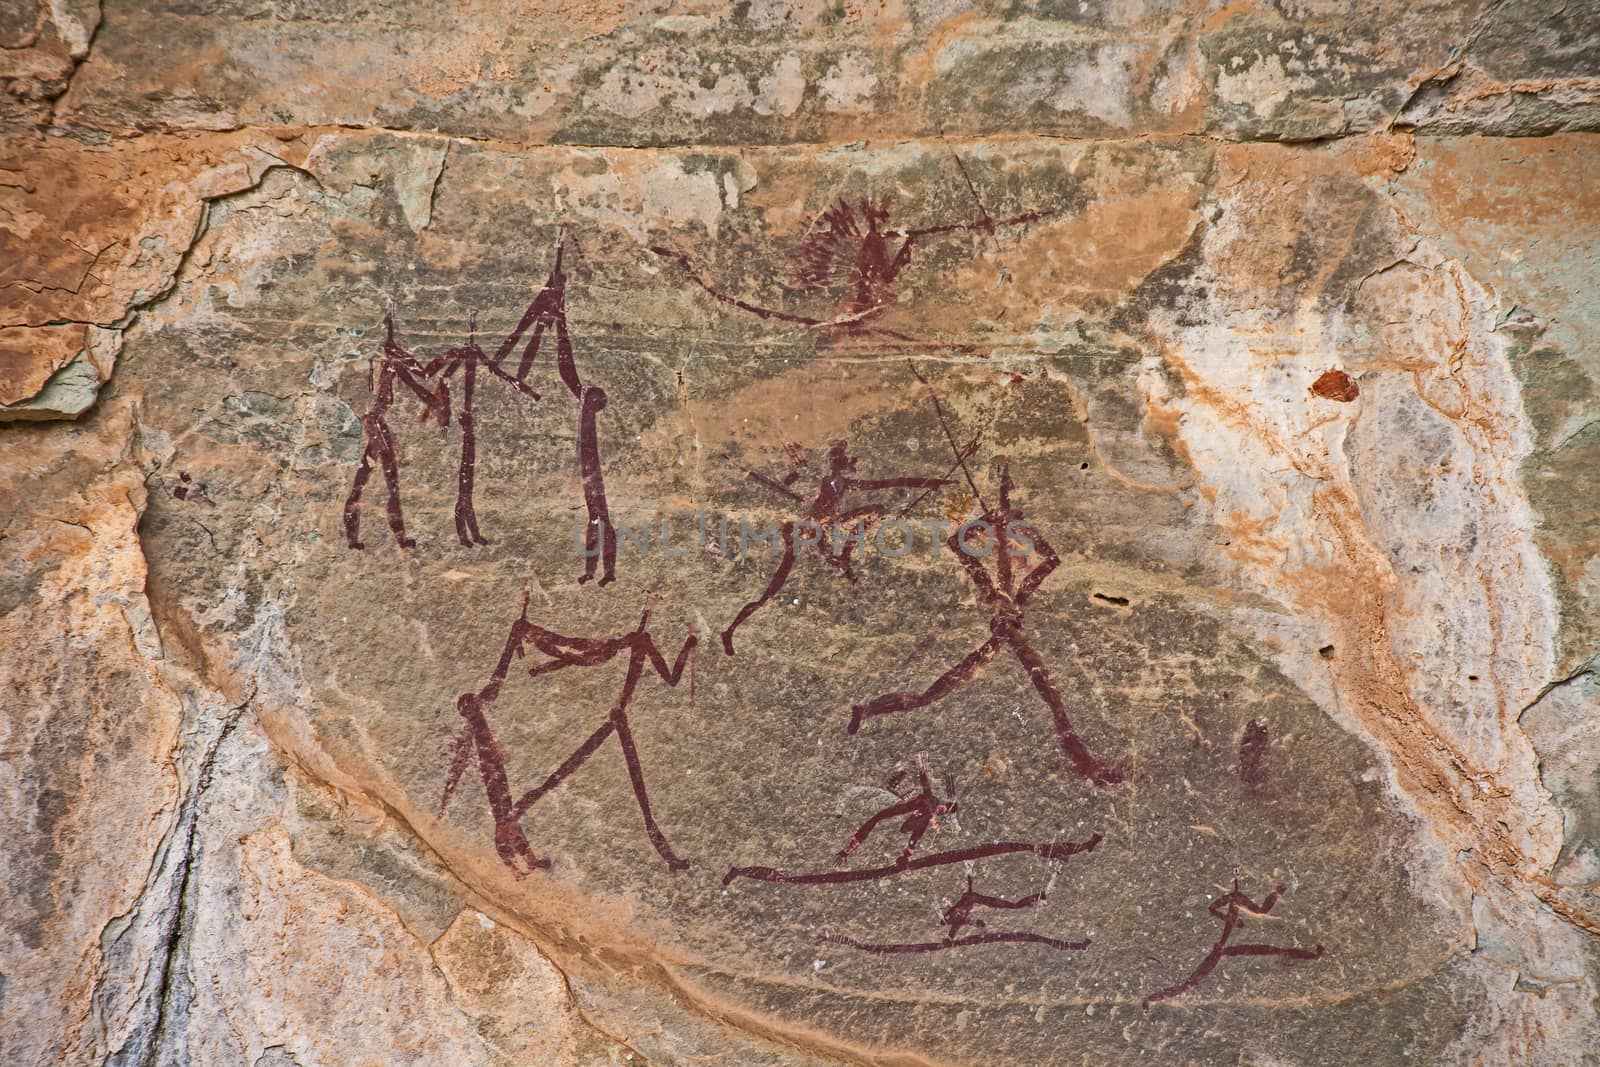 Bushman Rock Art in the "War Cave" near Injisuthi in the Drakensberg South Africa.